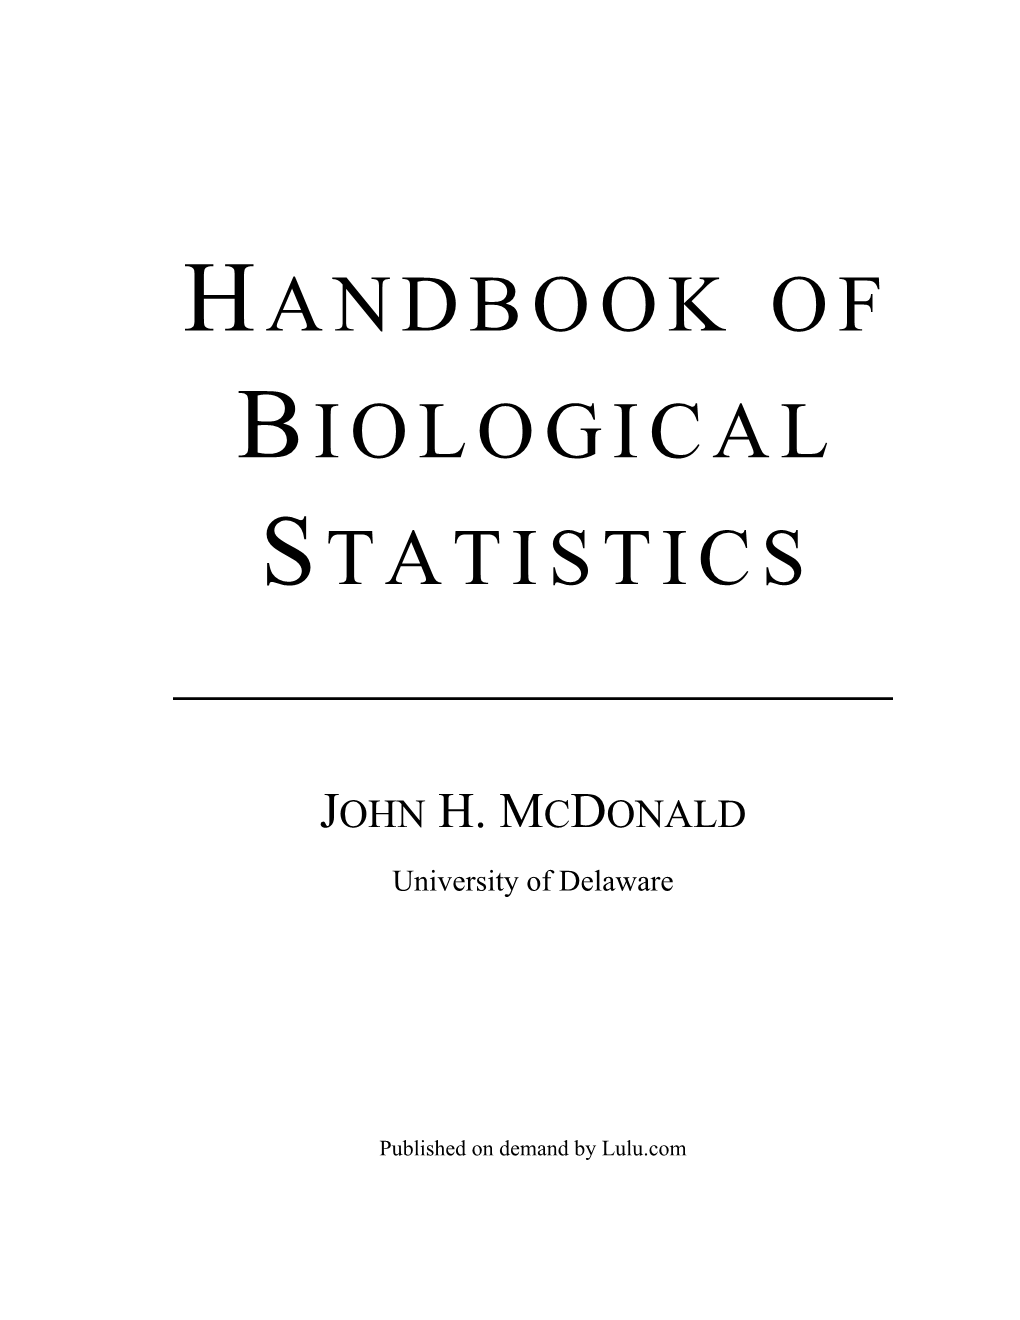 Handbook of Biological Statistics, First Edition